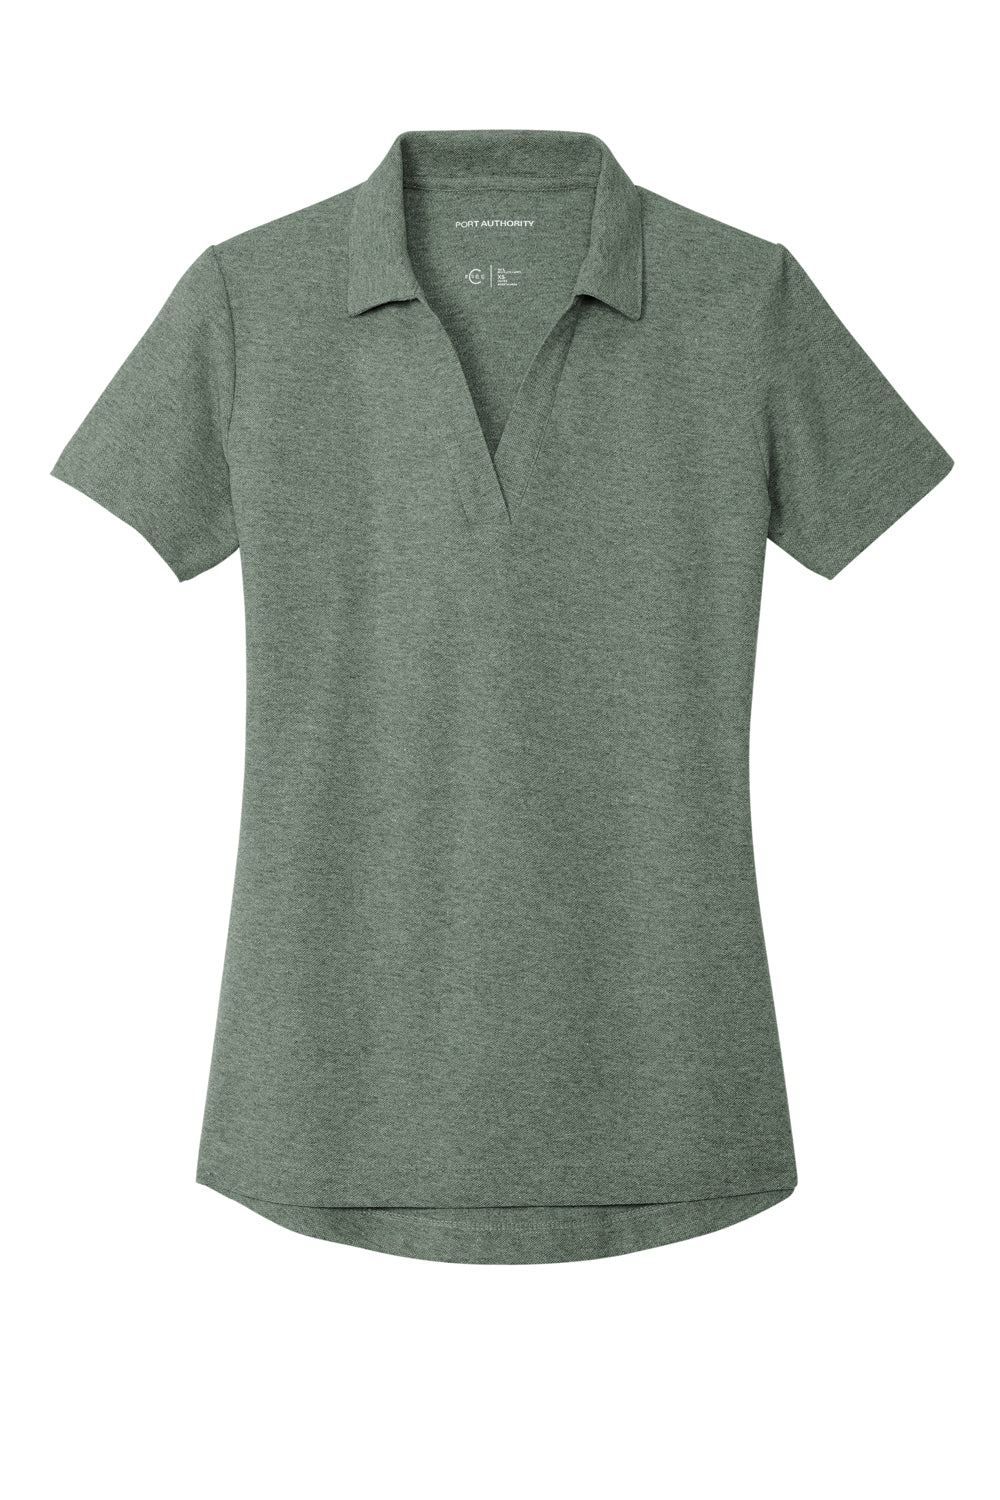 Port Authority LK867 Womens C-FREE Pique Short Sleeve Polo Shirt Heather Dark Green Flat Front